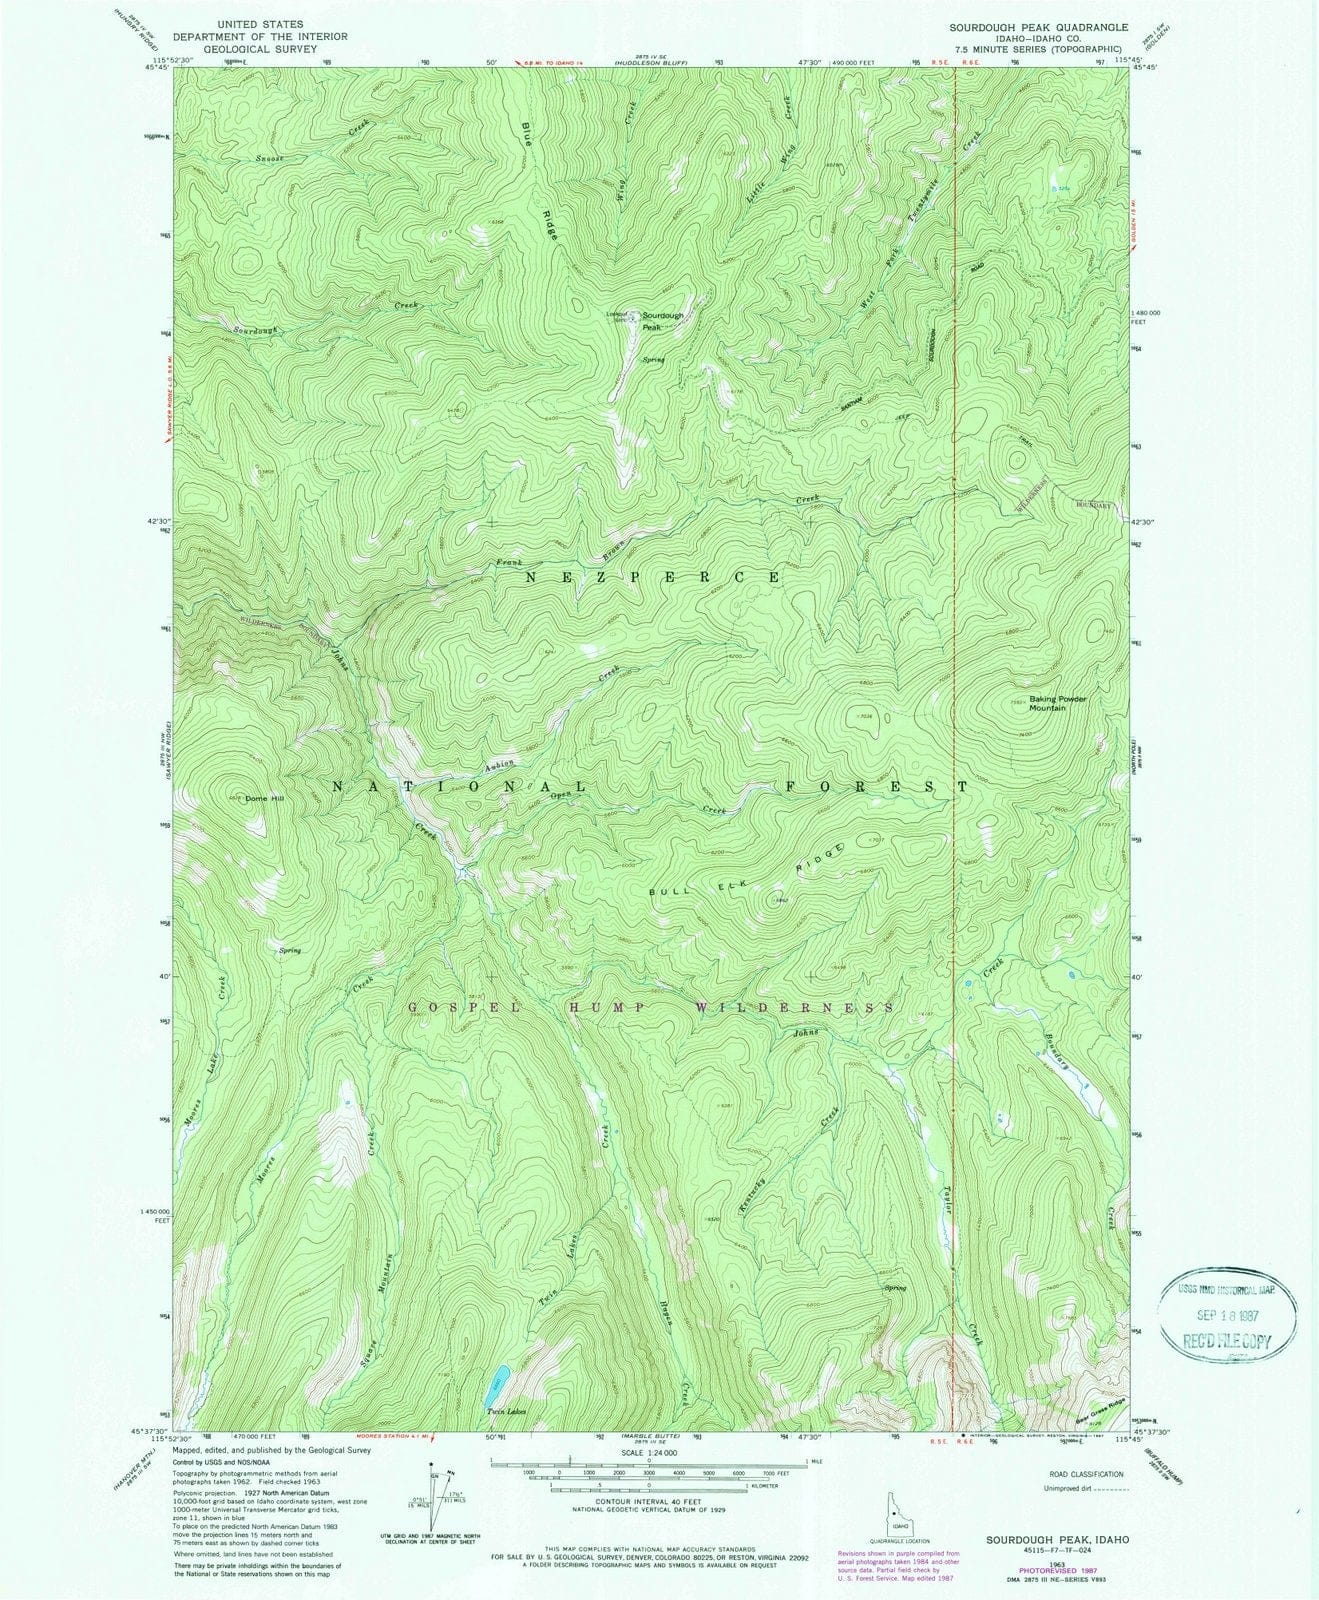 1963 Sourdough Peak, ID - Idaho - USGS Topographic Map